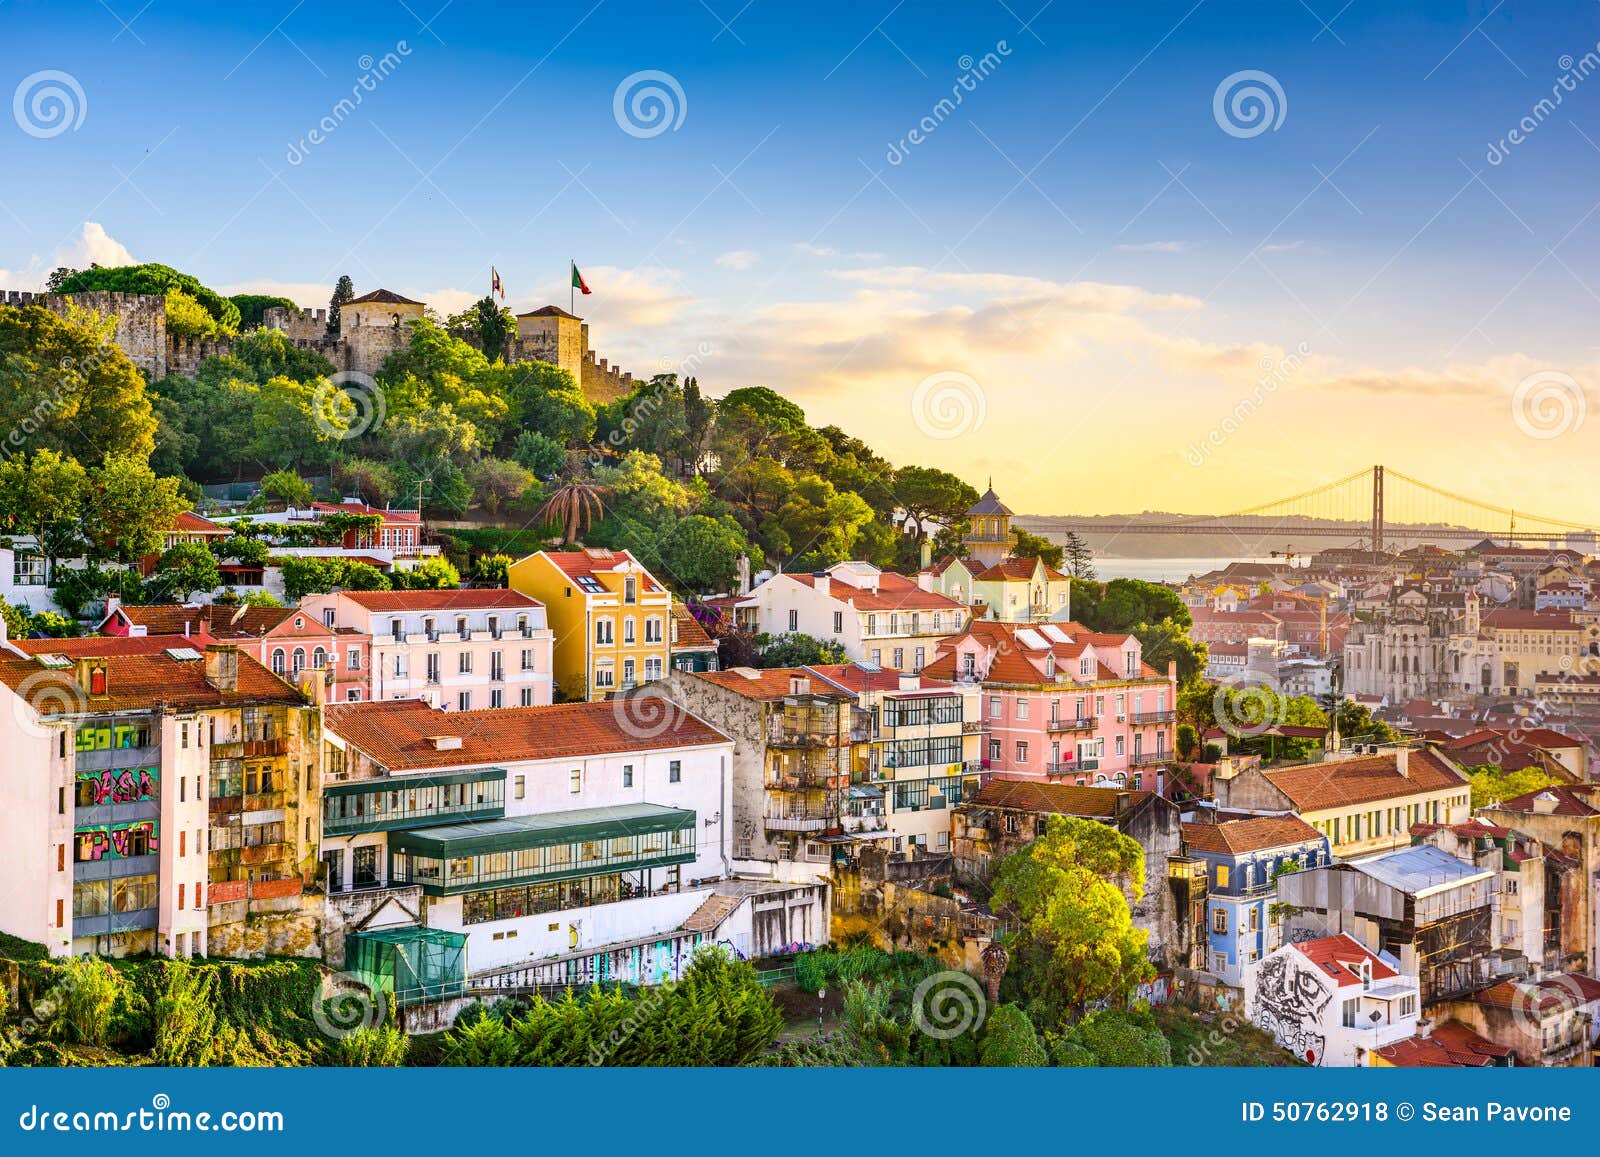 lisbon, portugal skyline